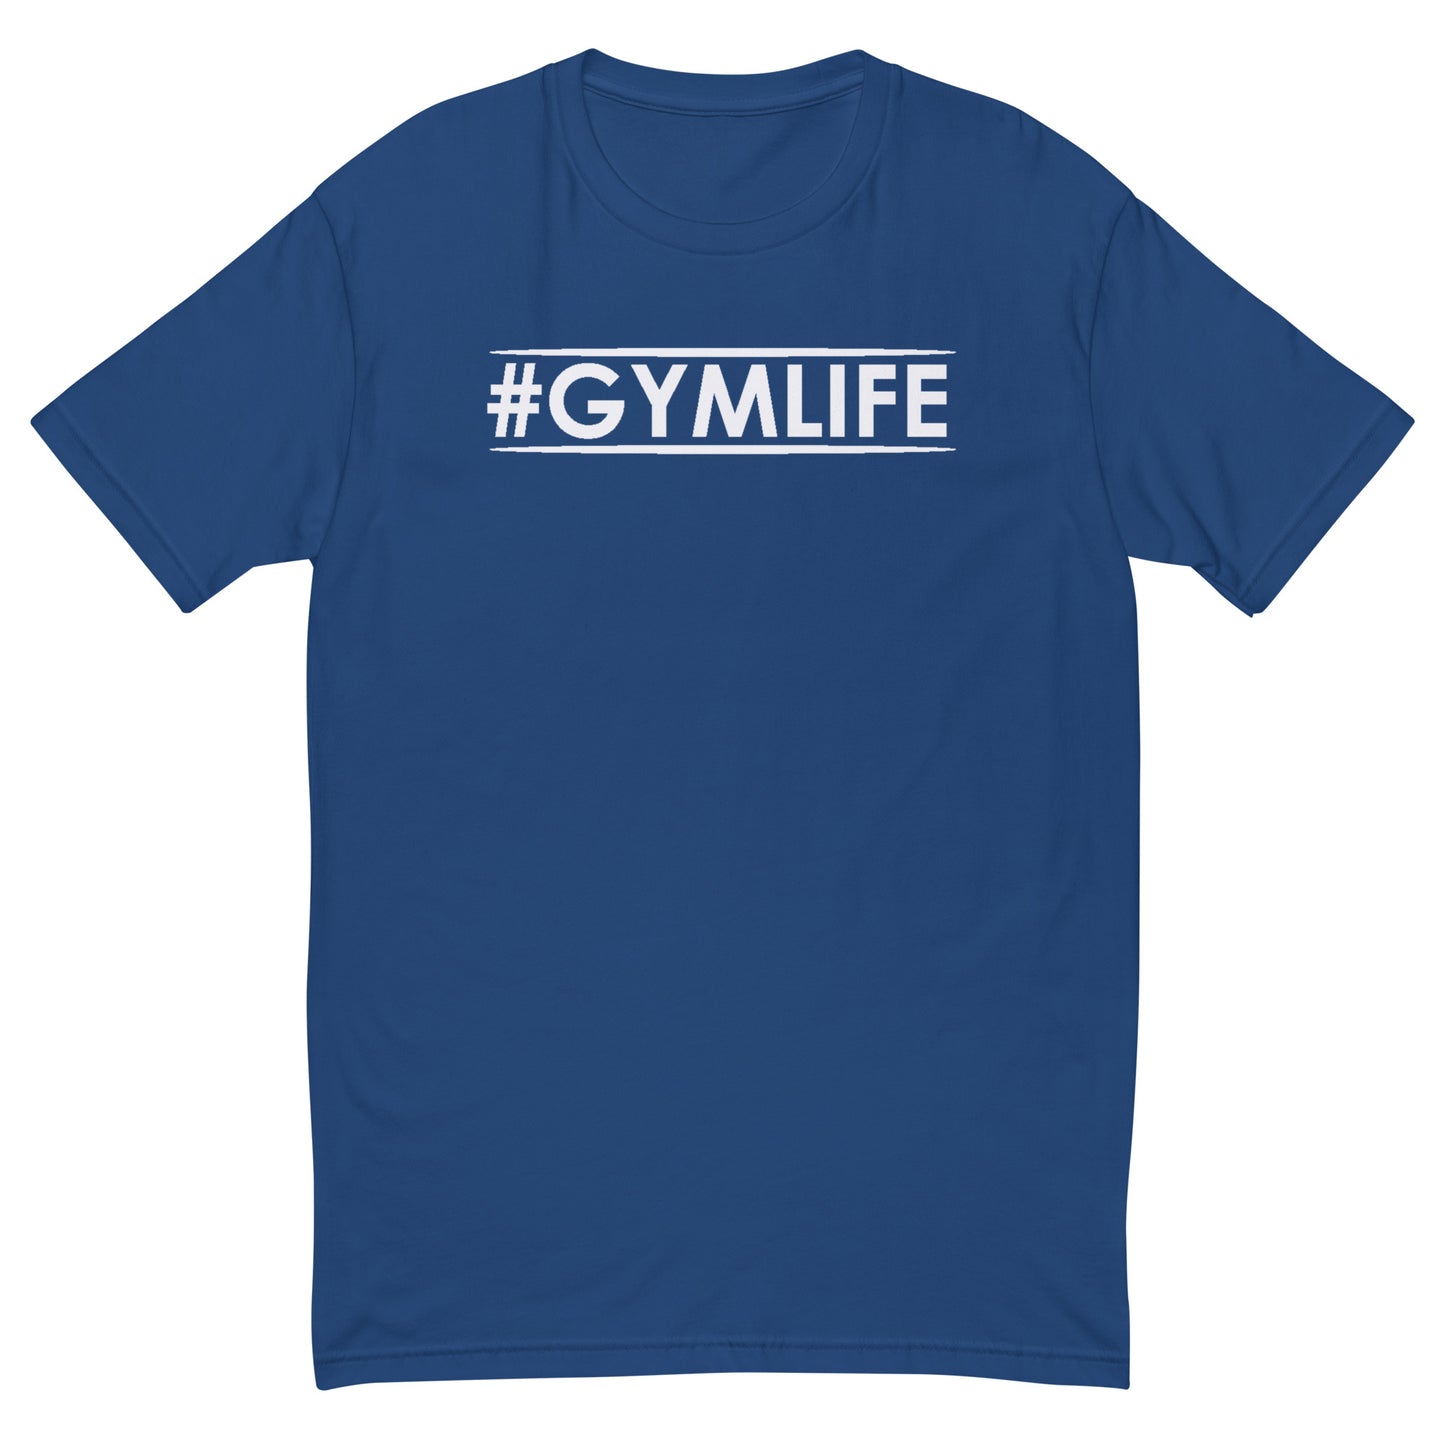 Men's Gym Life Tee